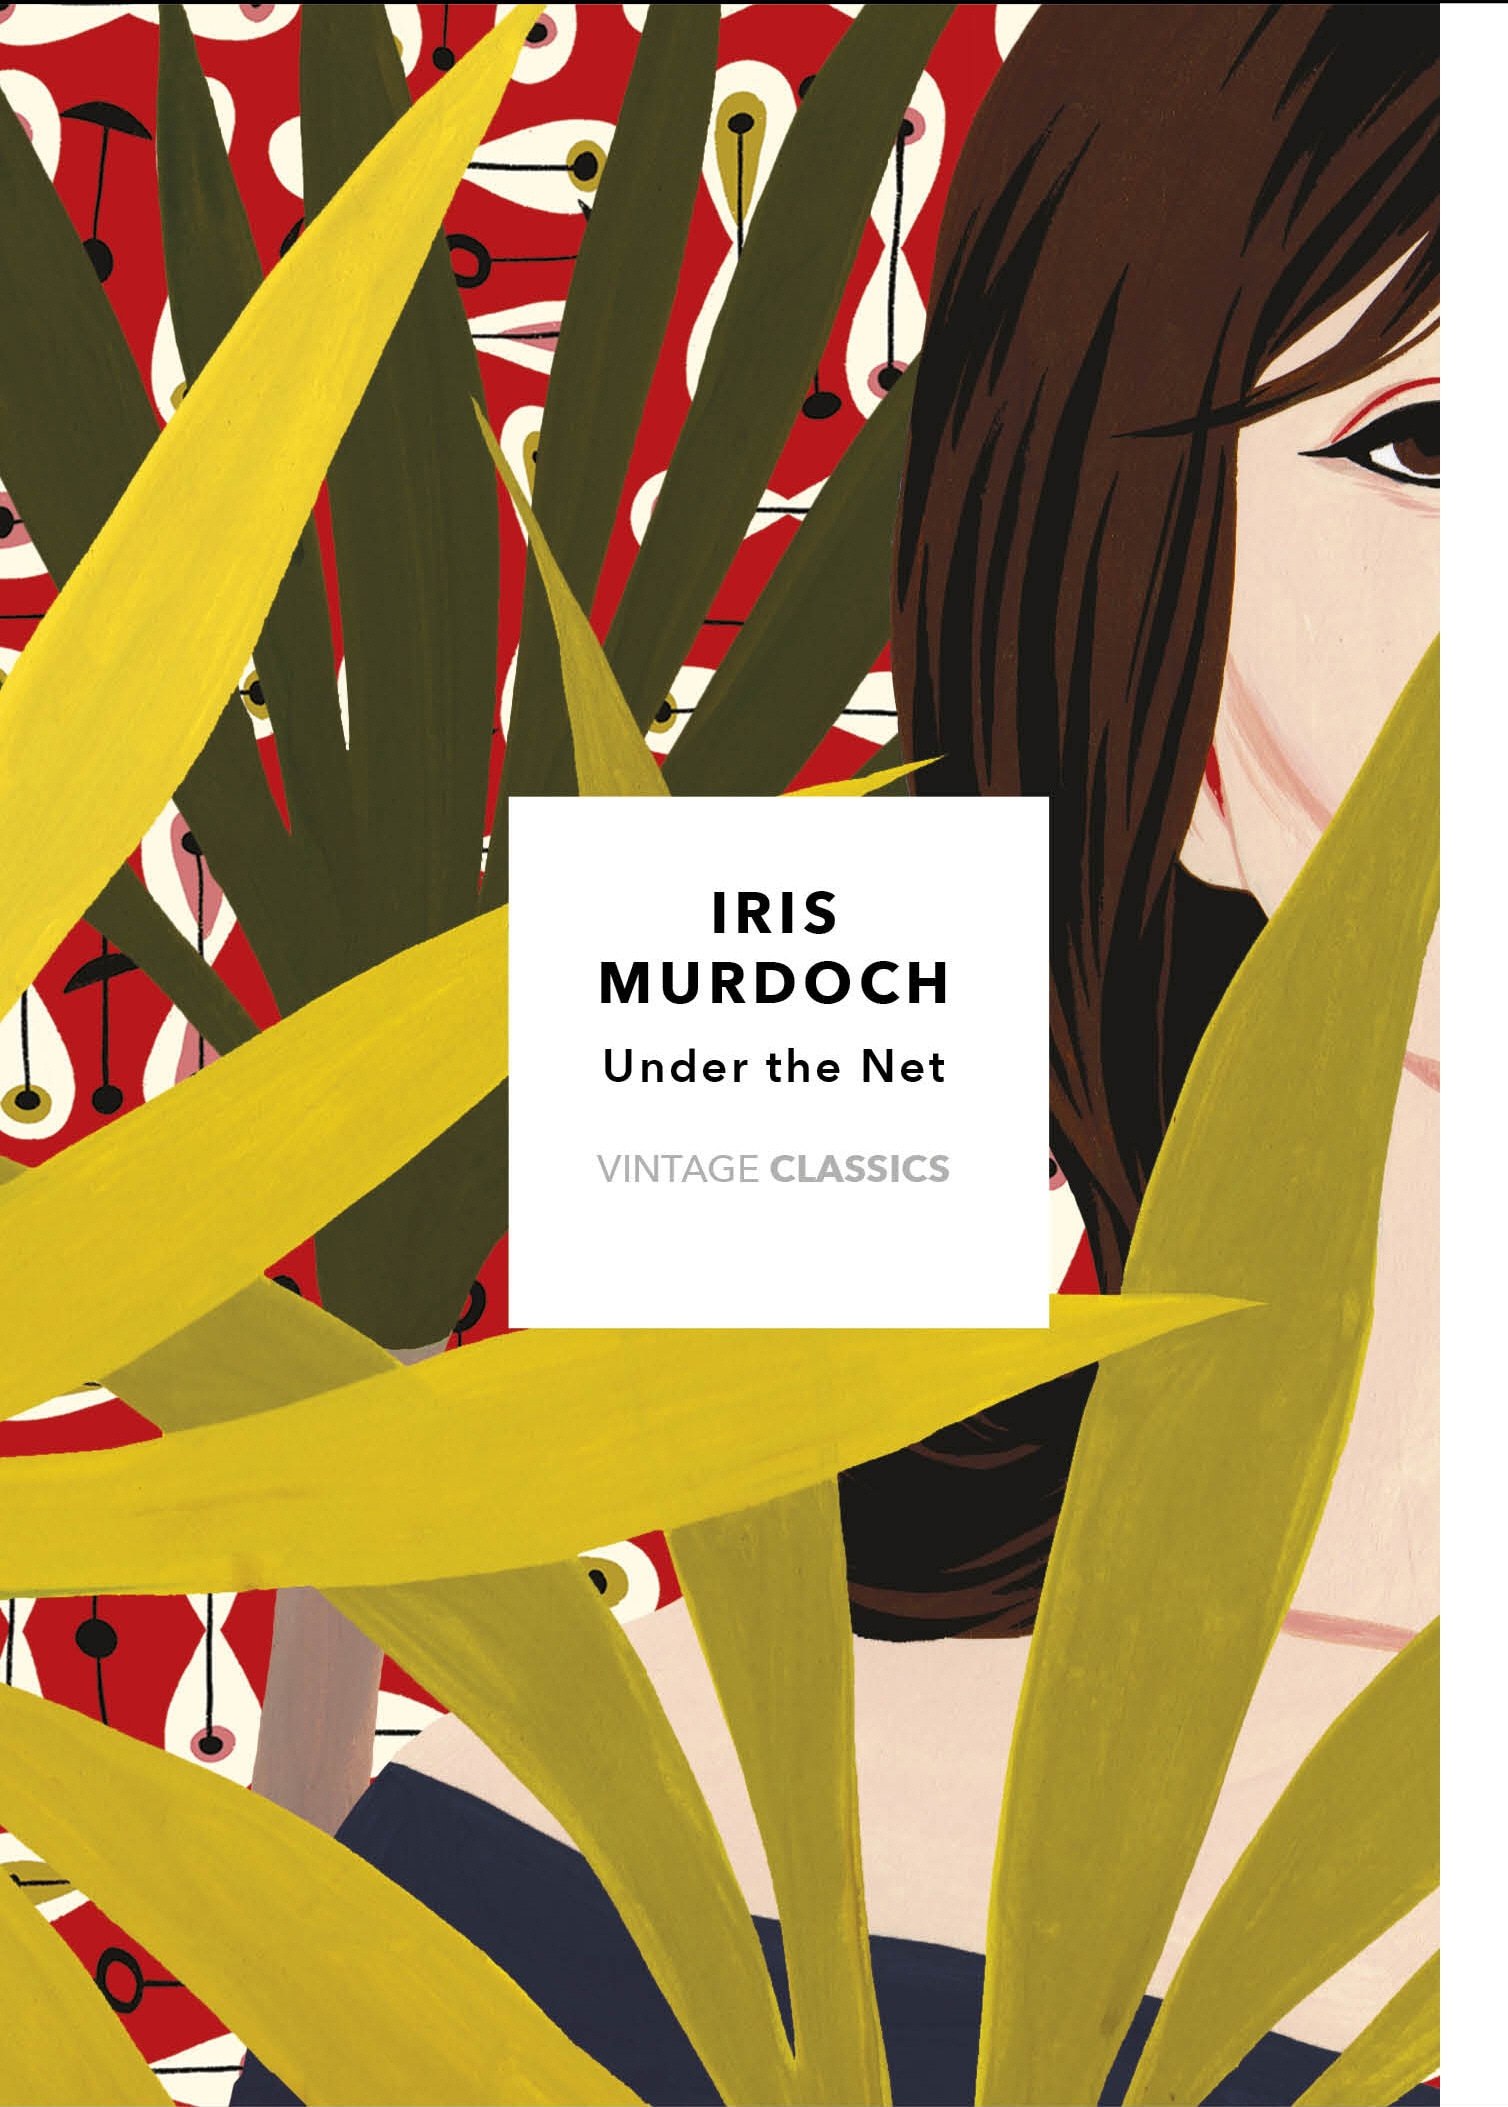 Book “Under The Net (Vintage Classics Murdoch Series)” by Iris Murdoch, Charlotte Mendelson — July 4, 2019